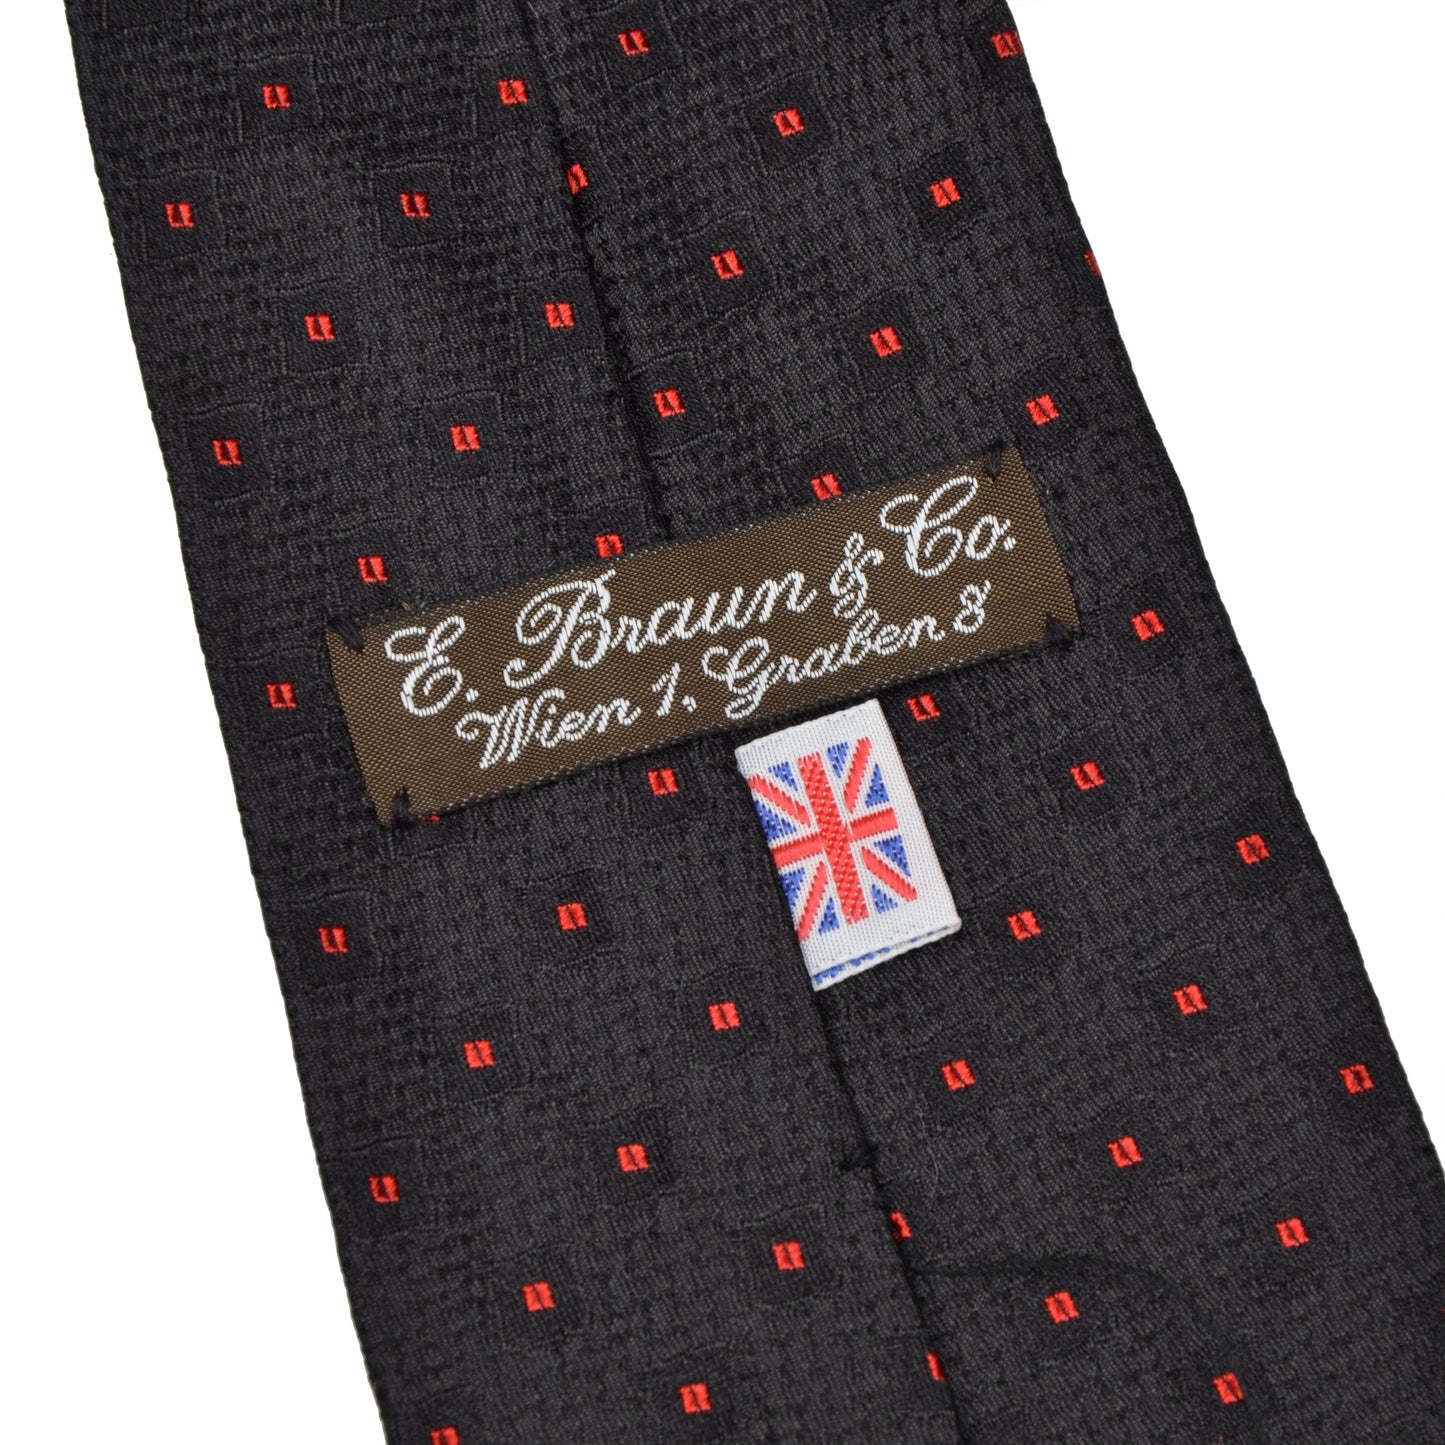 E. Braun & Co. Wien Silk Tie - Black & Red